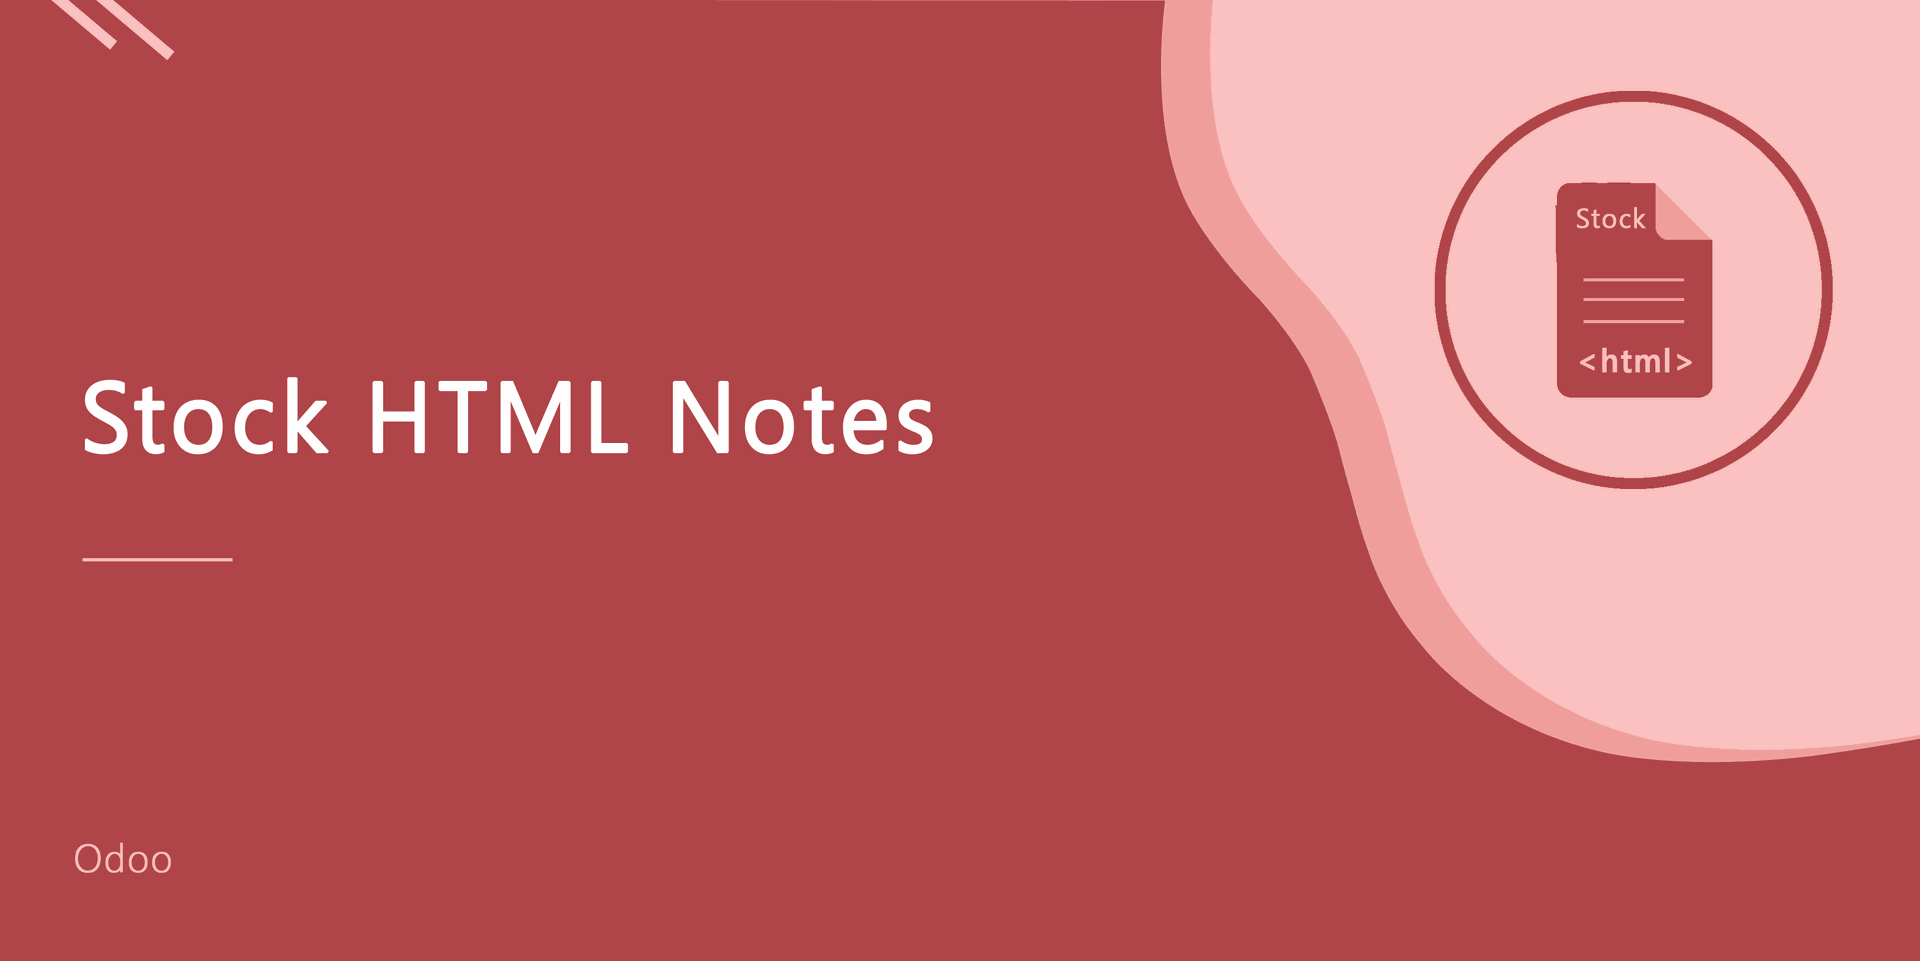 Stock HTML Notes